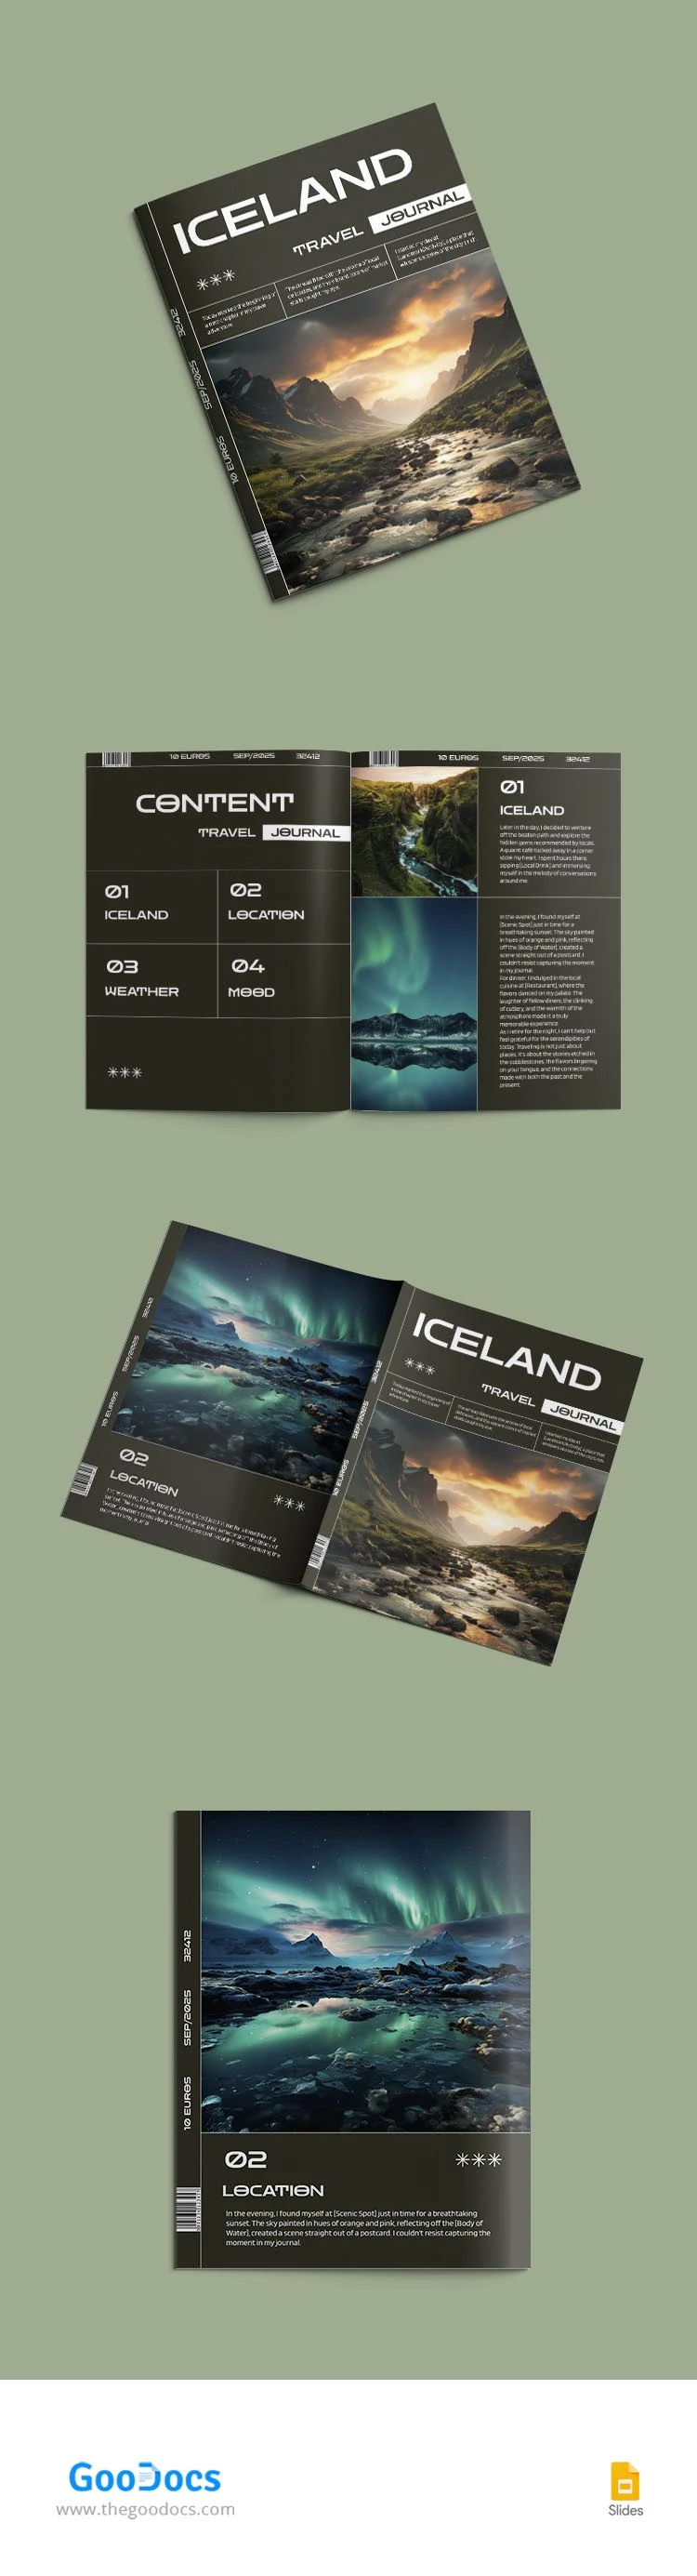 Iceland Journal -> Diario dell'Islanda - free Google Docs Template - 10067513